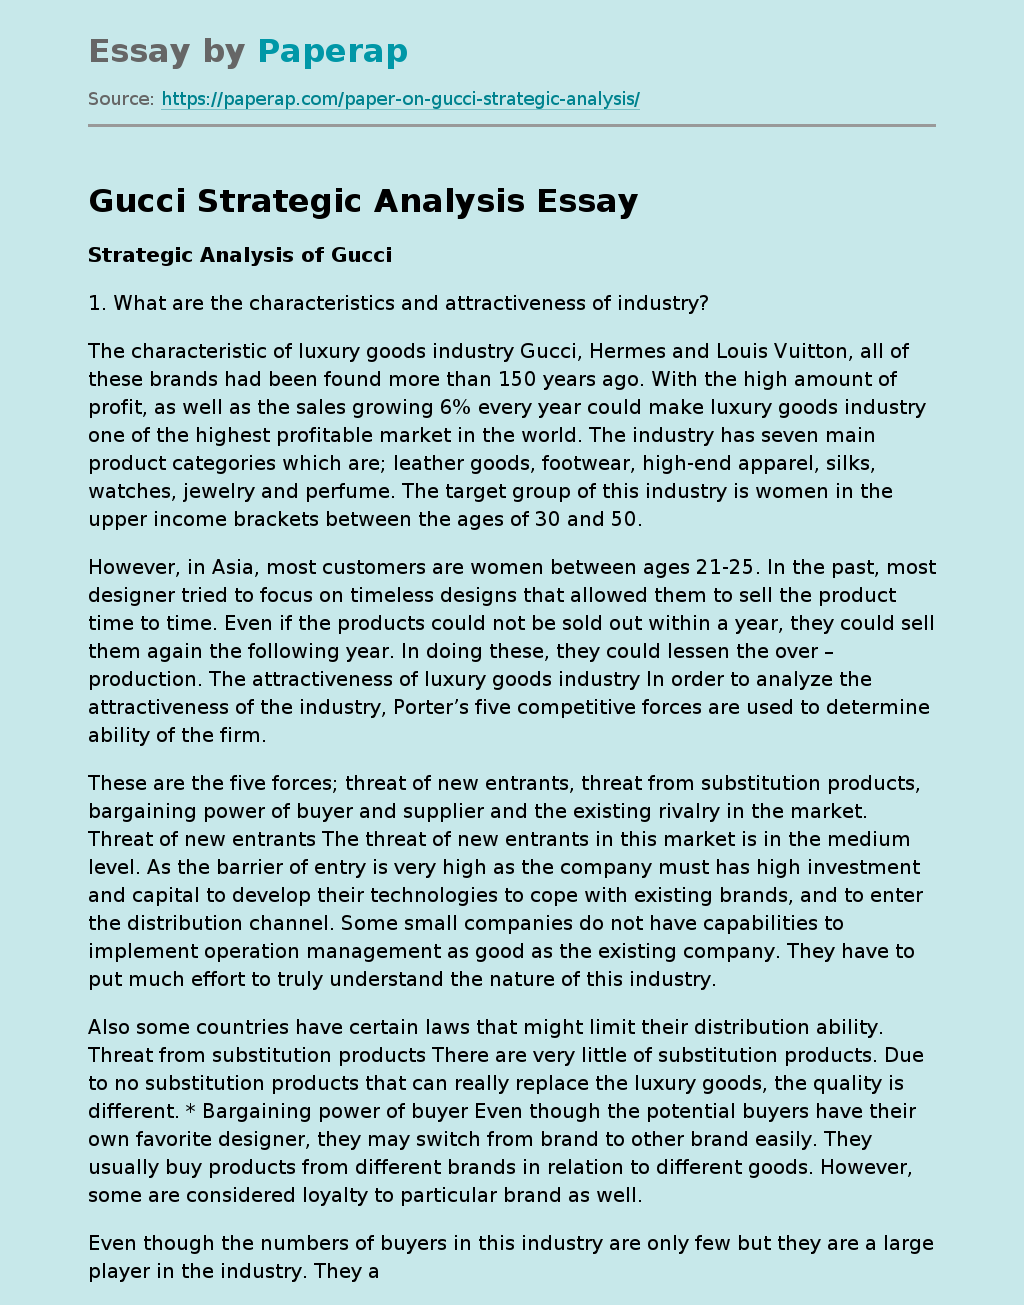 Gucci Strategic Analysis